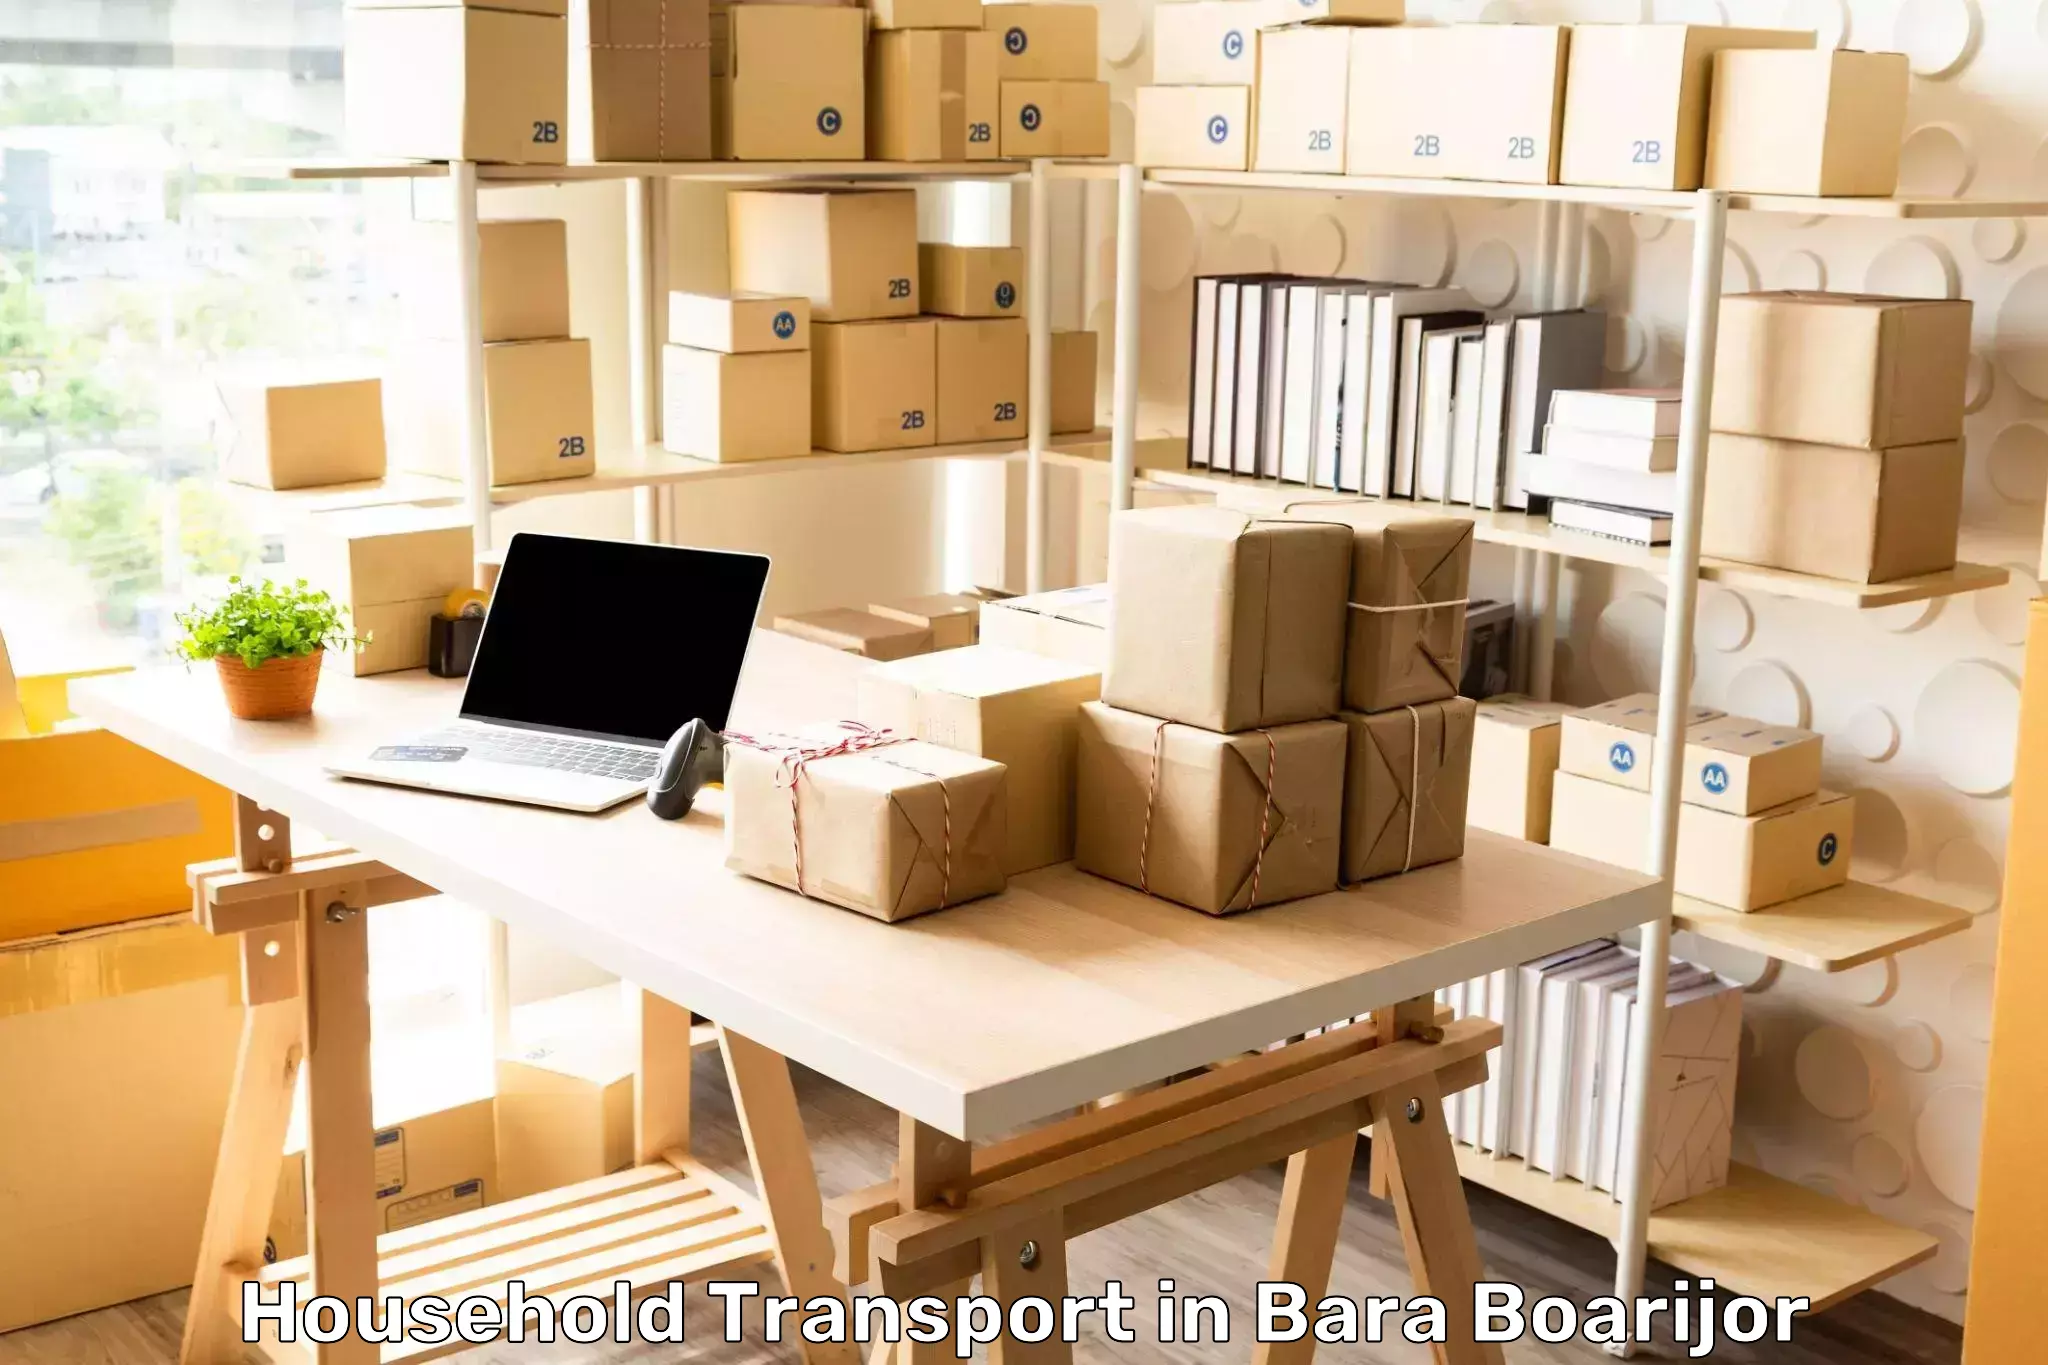 Long-distance household transport in Bara Boarijor